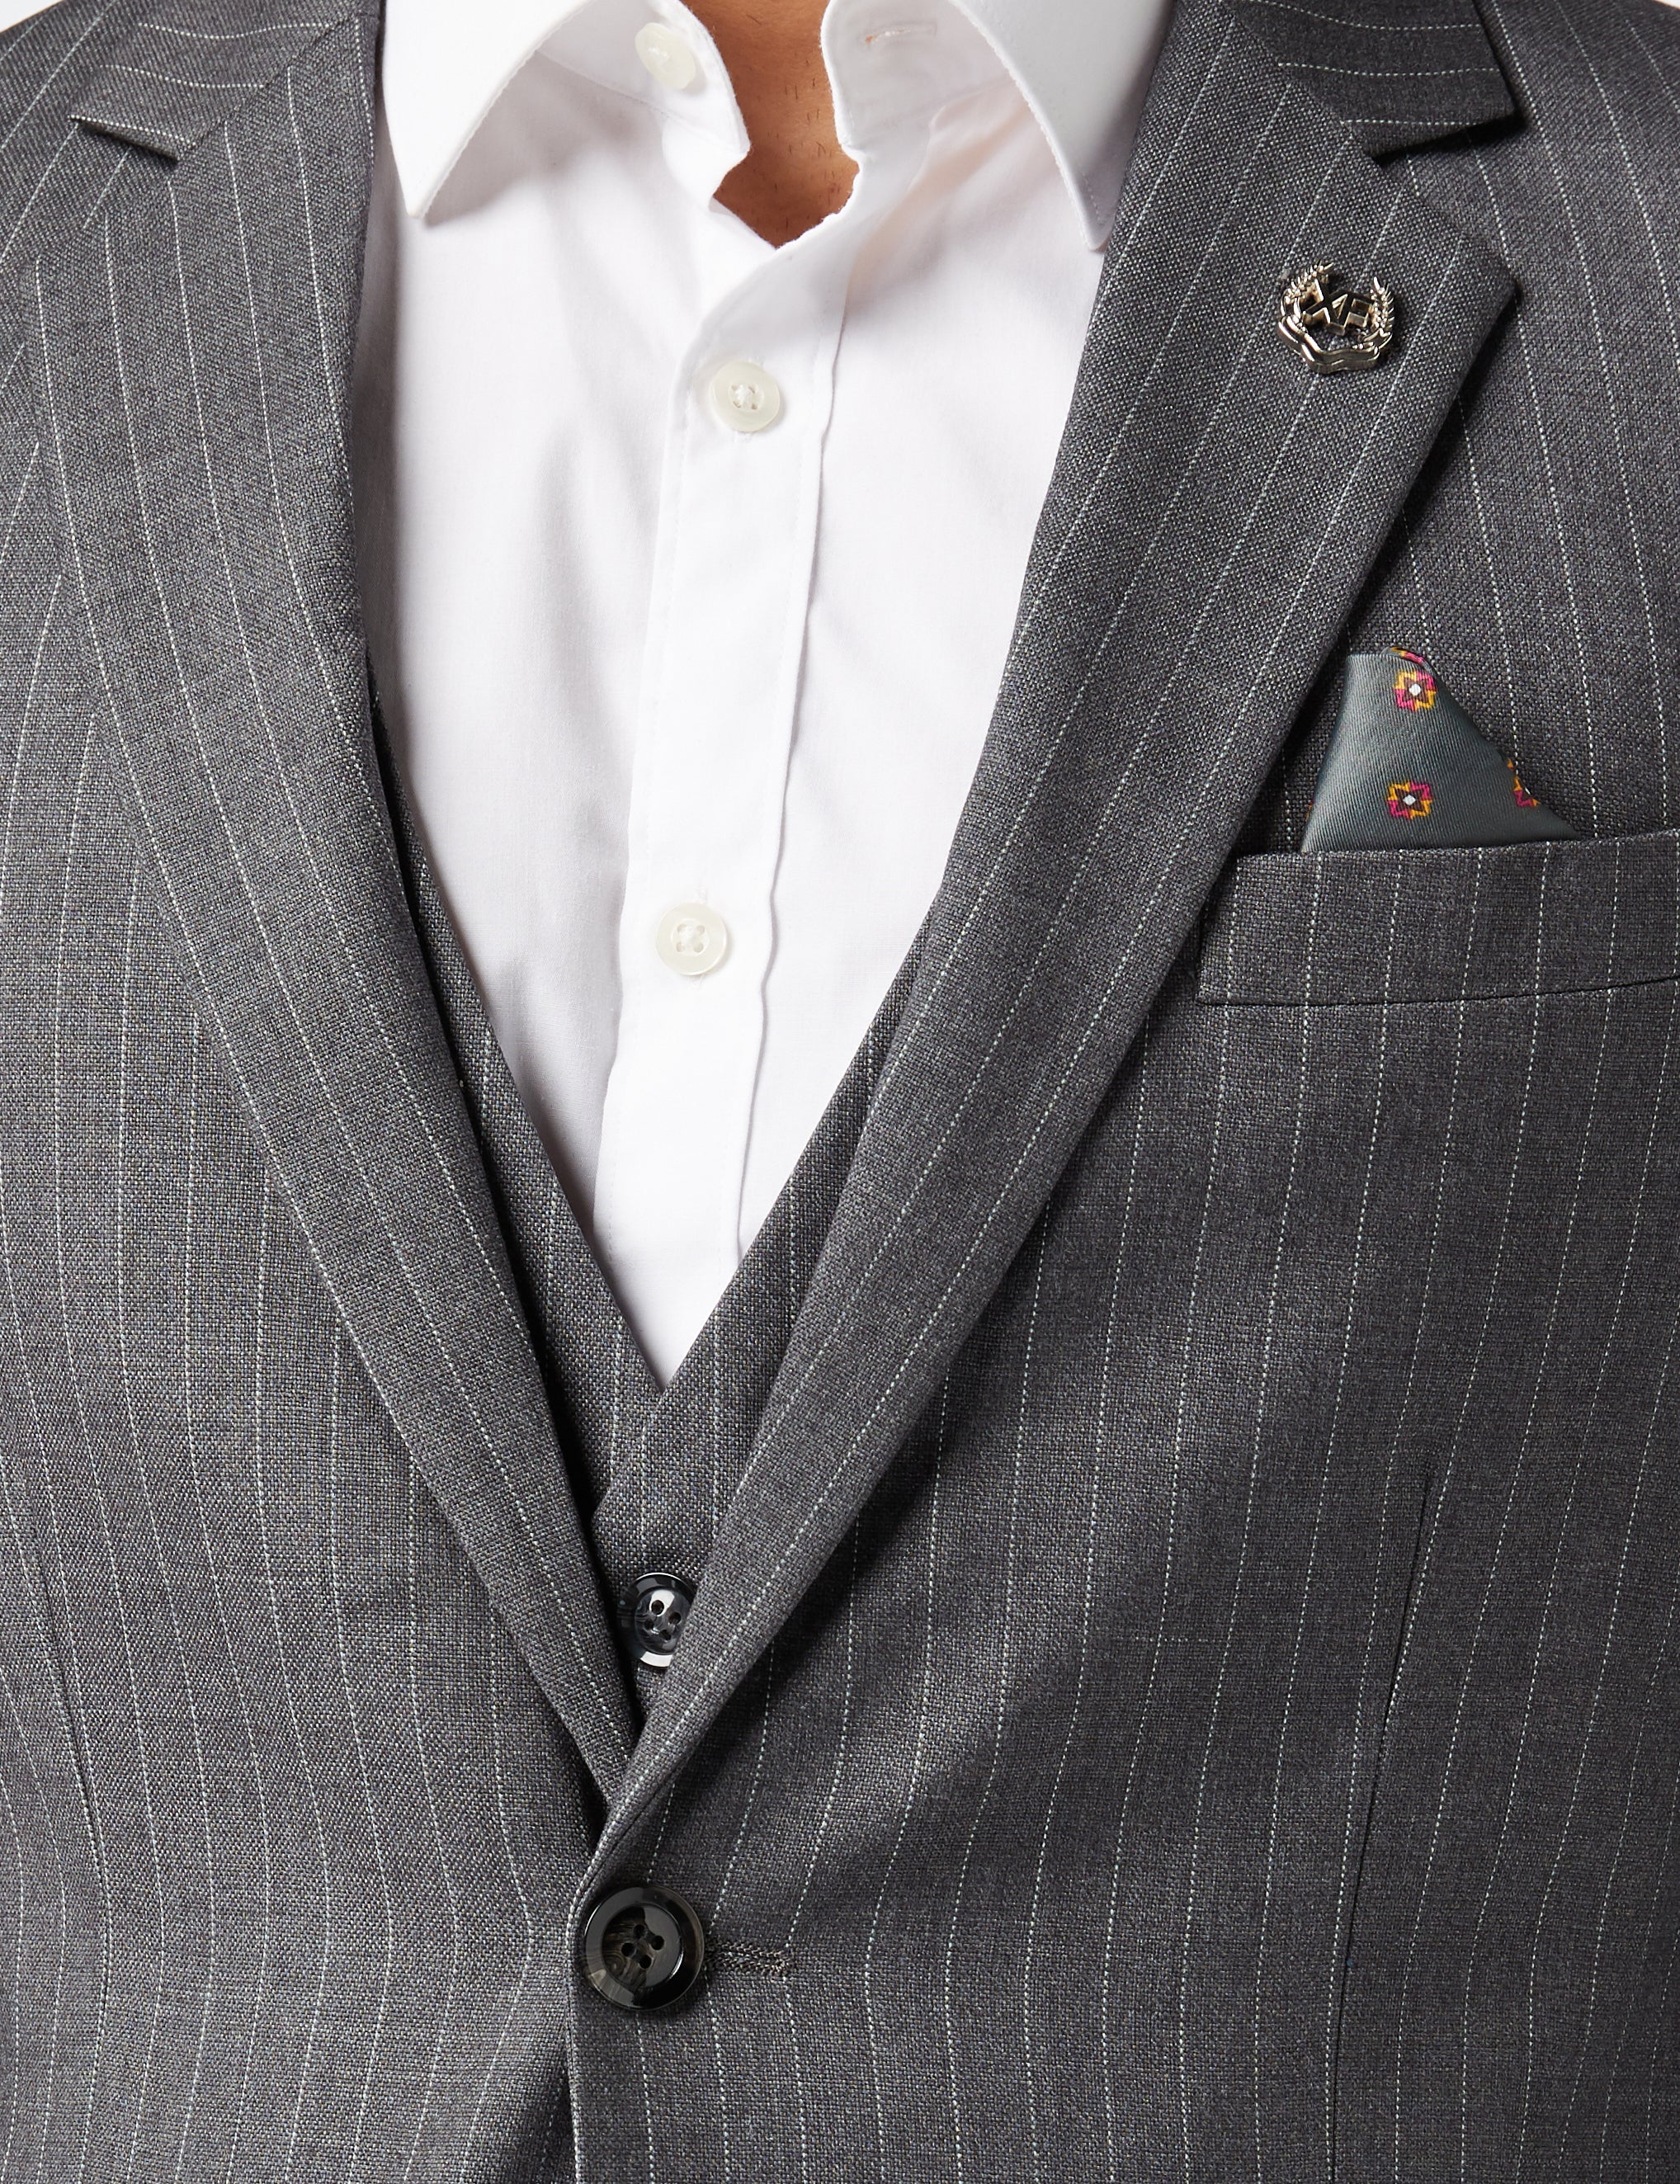 5 Piece Pin Stripe Grey Suit